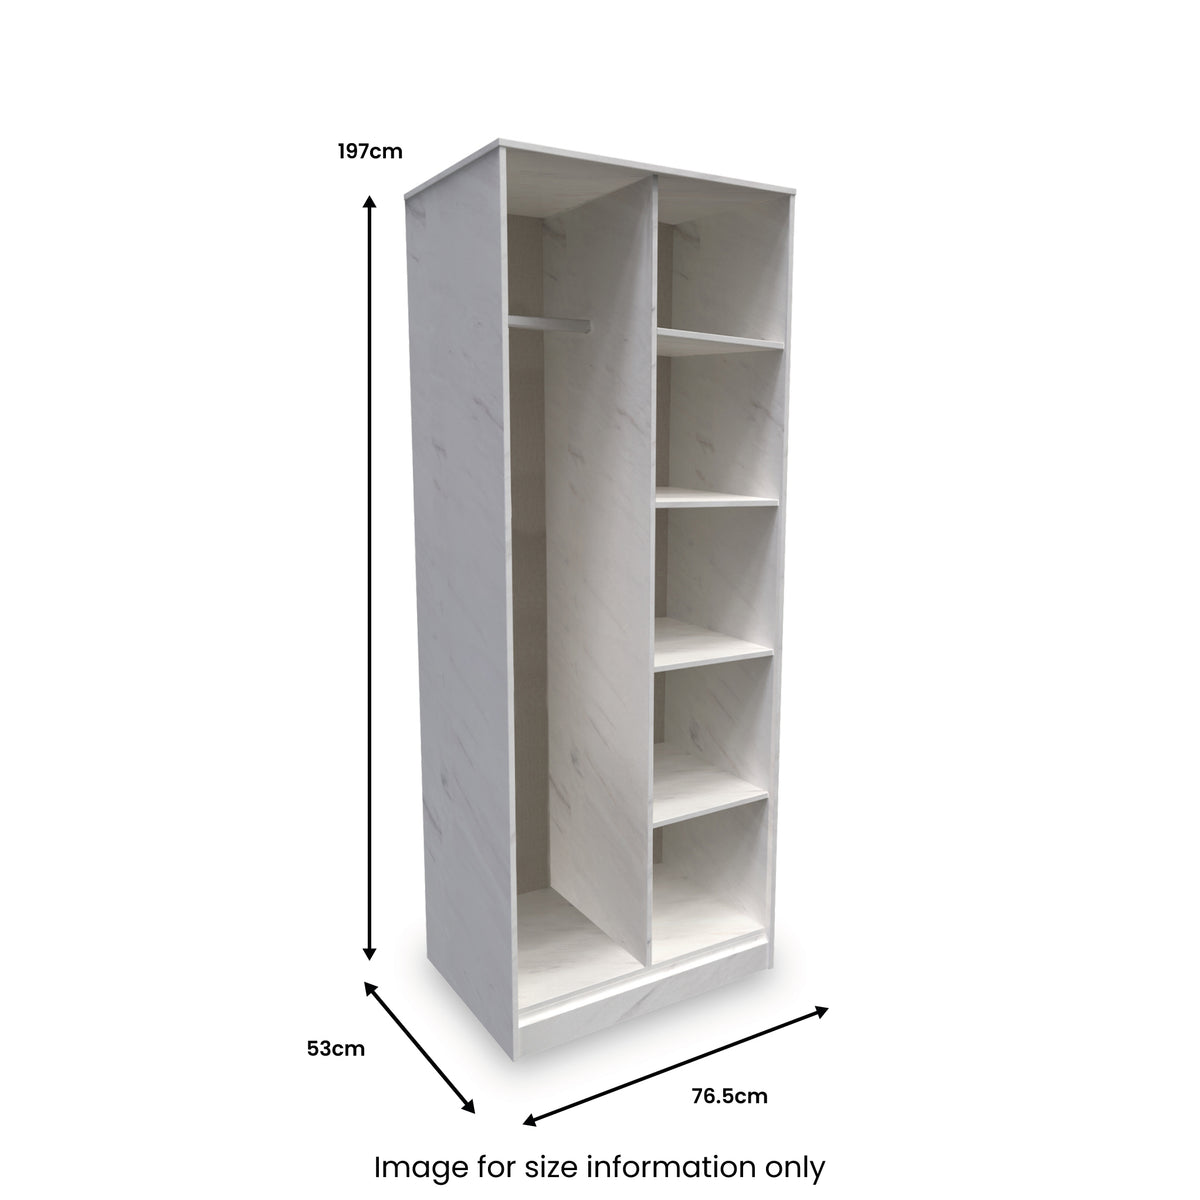 Moreno Marble Open Shelf Unit from Roseland Furniture